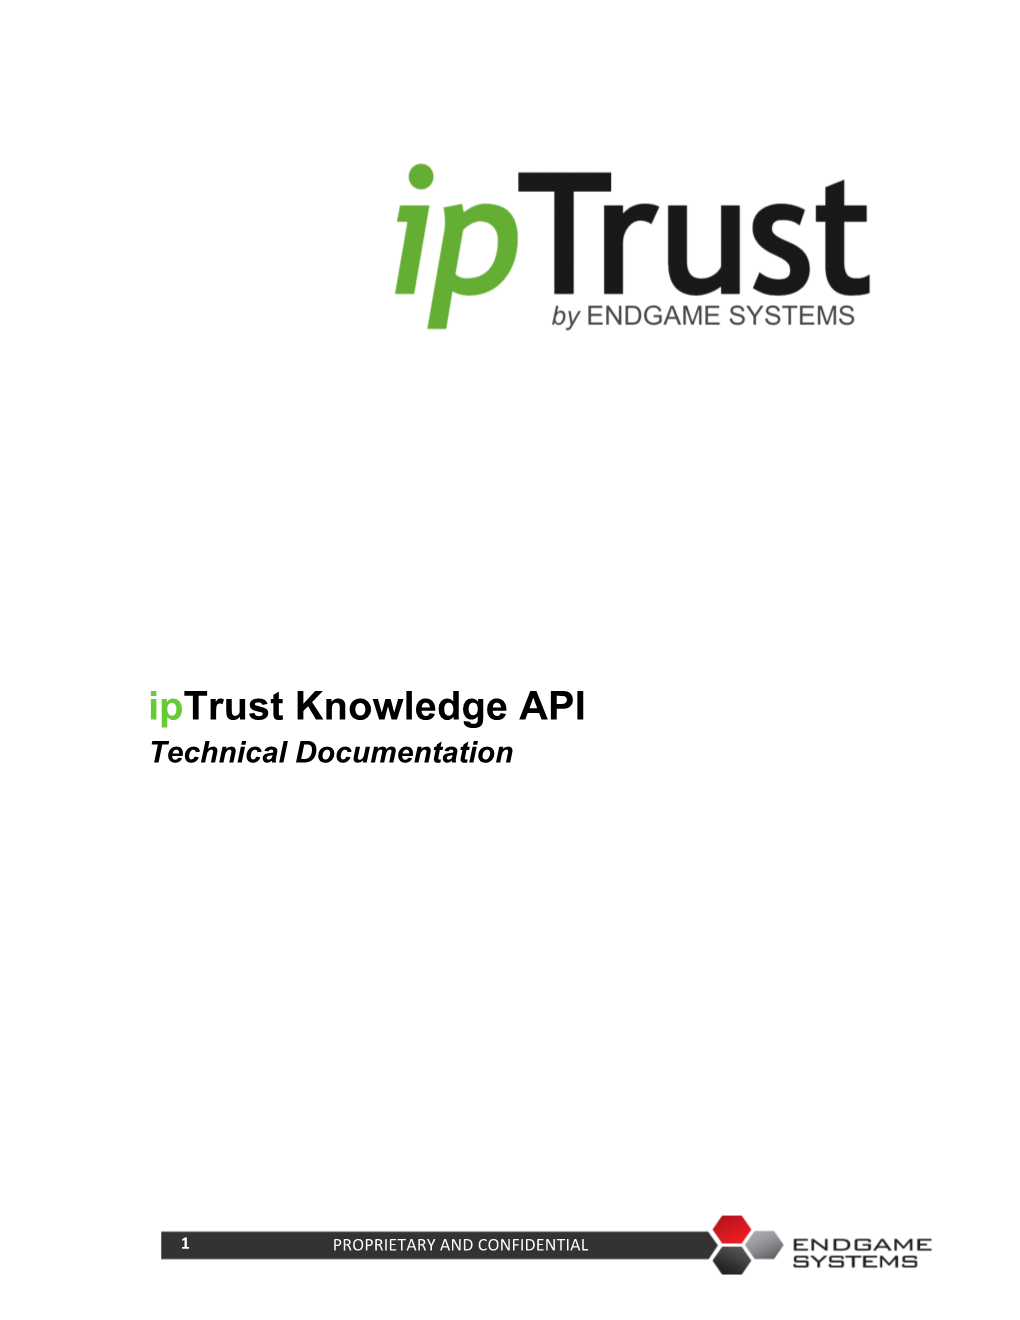 Iptrust Knowledge API Technical Documentation